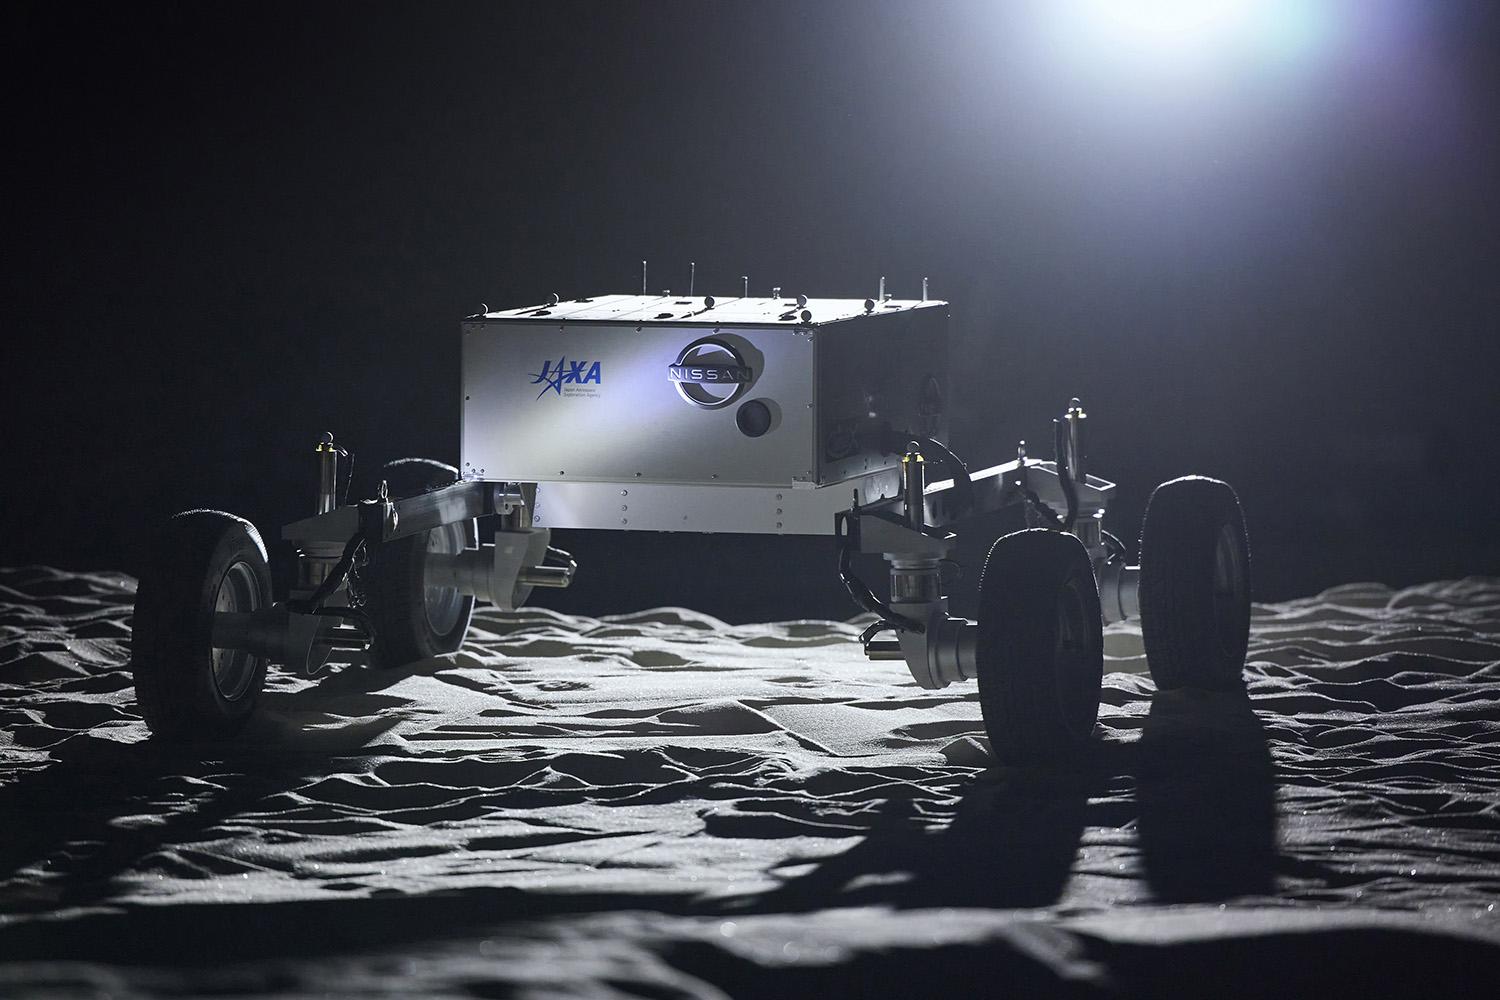 JAXAと日産が共同開発した月面探査車両ローバのスタイリング 〜 画像2